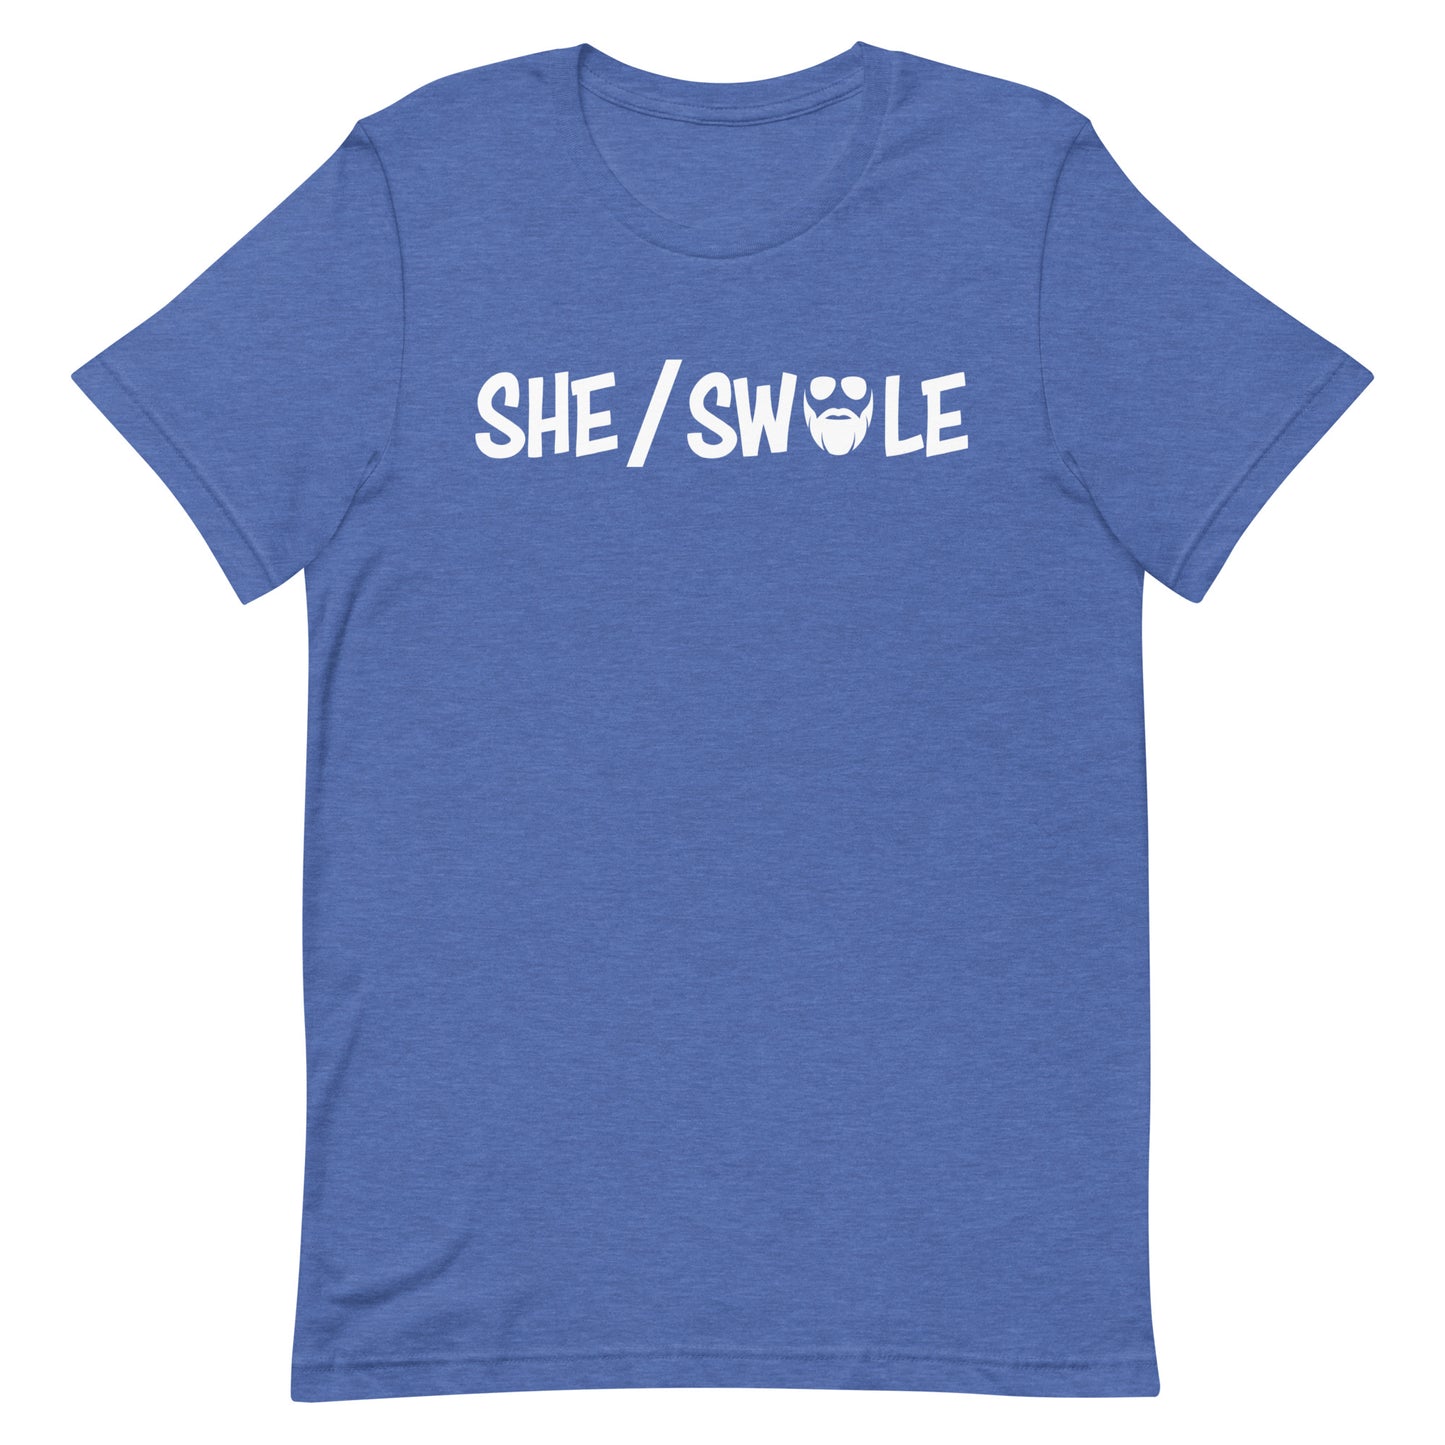 She/Swole T-Shirt